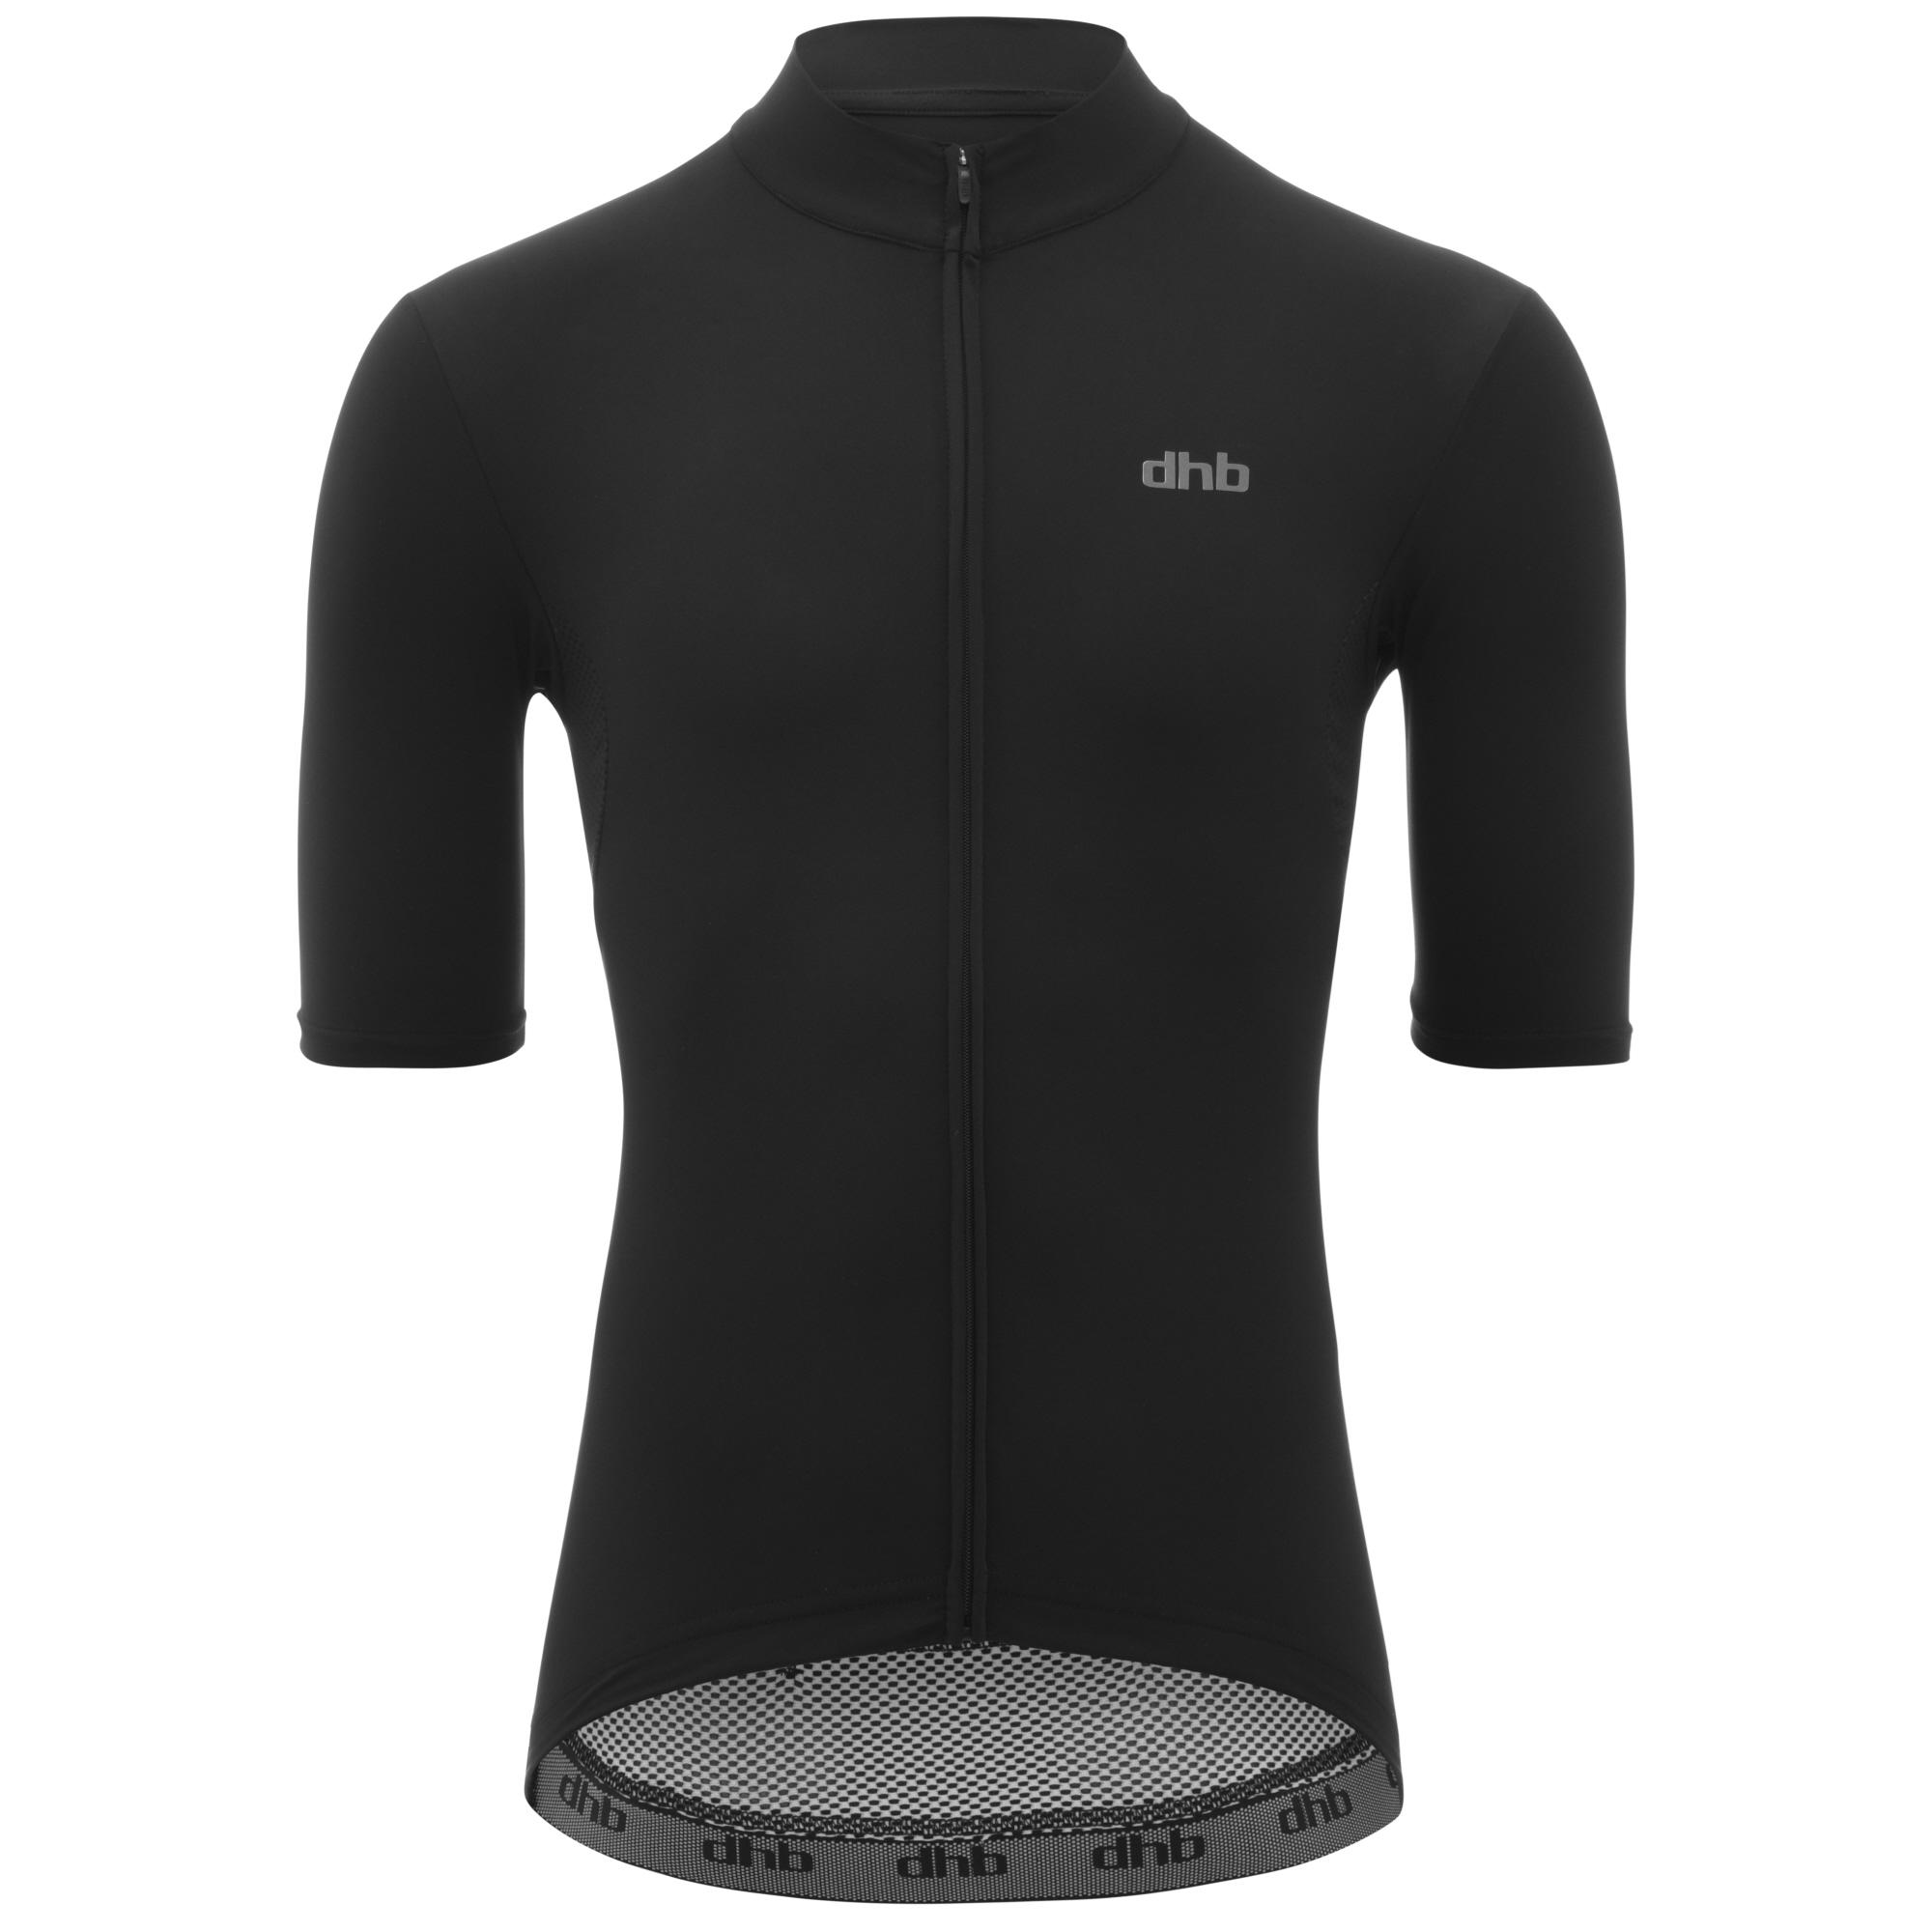 Dhb Aeron Xc Short Sleeve Jersey - Black